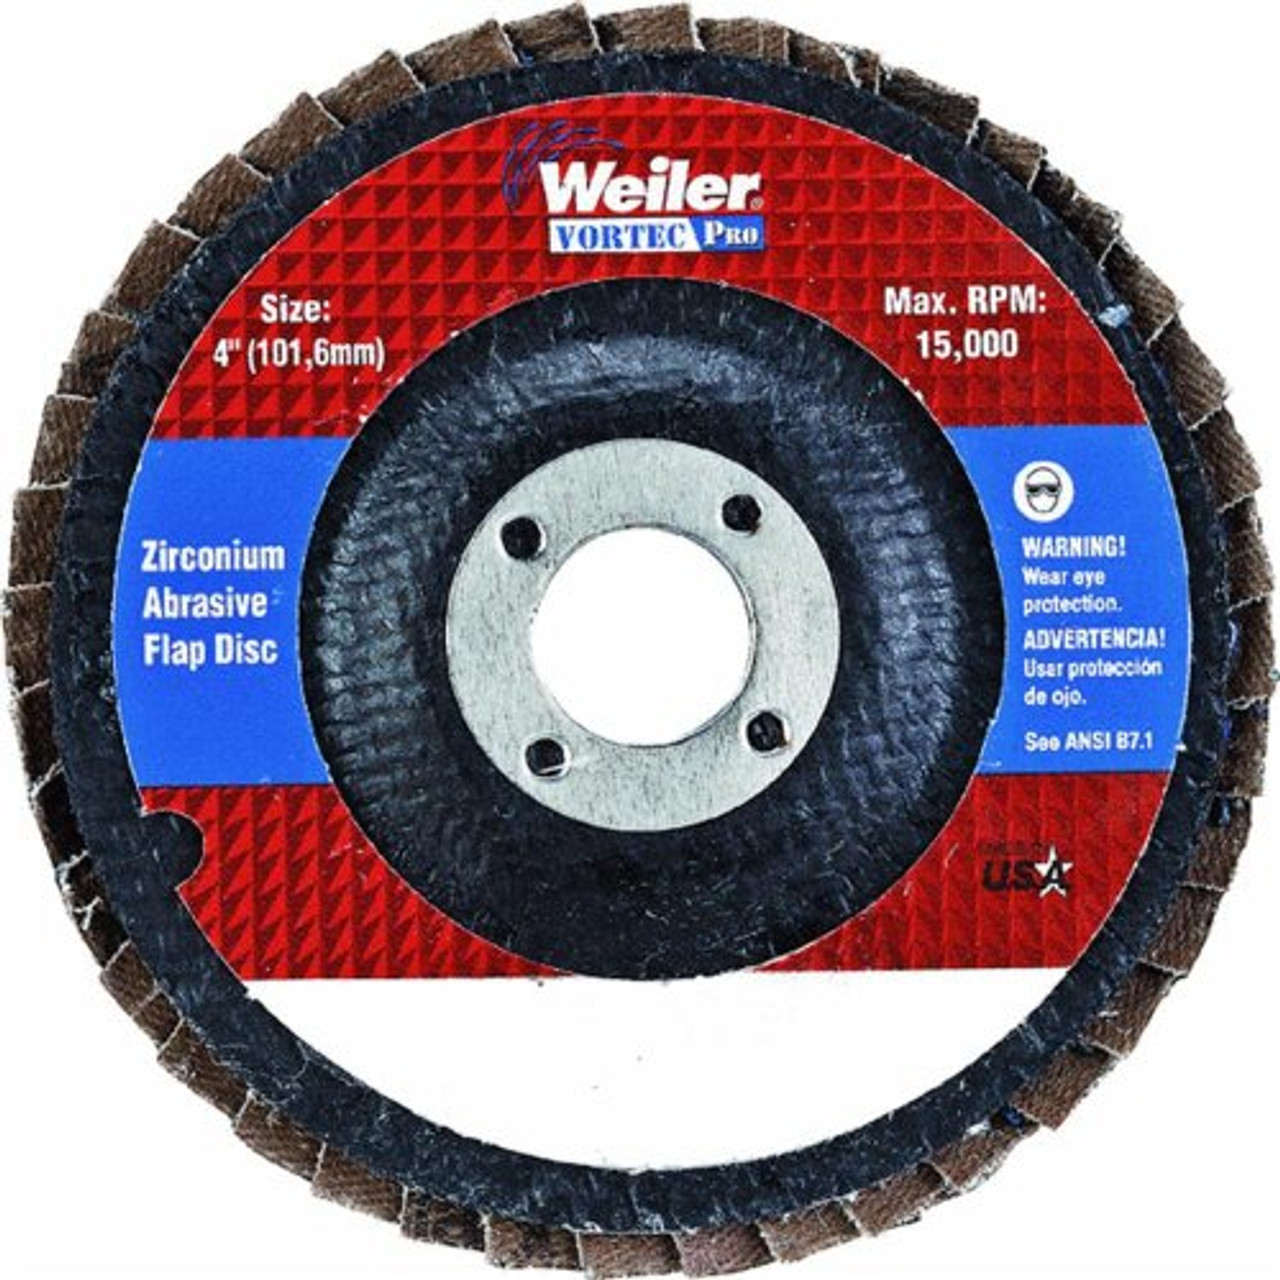 Weiler 30825 29 Non-Woven Zirconium Medium Grade Flap Disc, 4